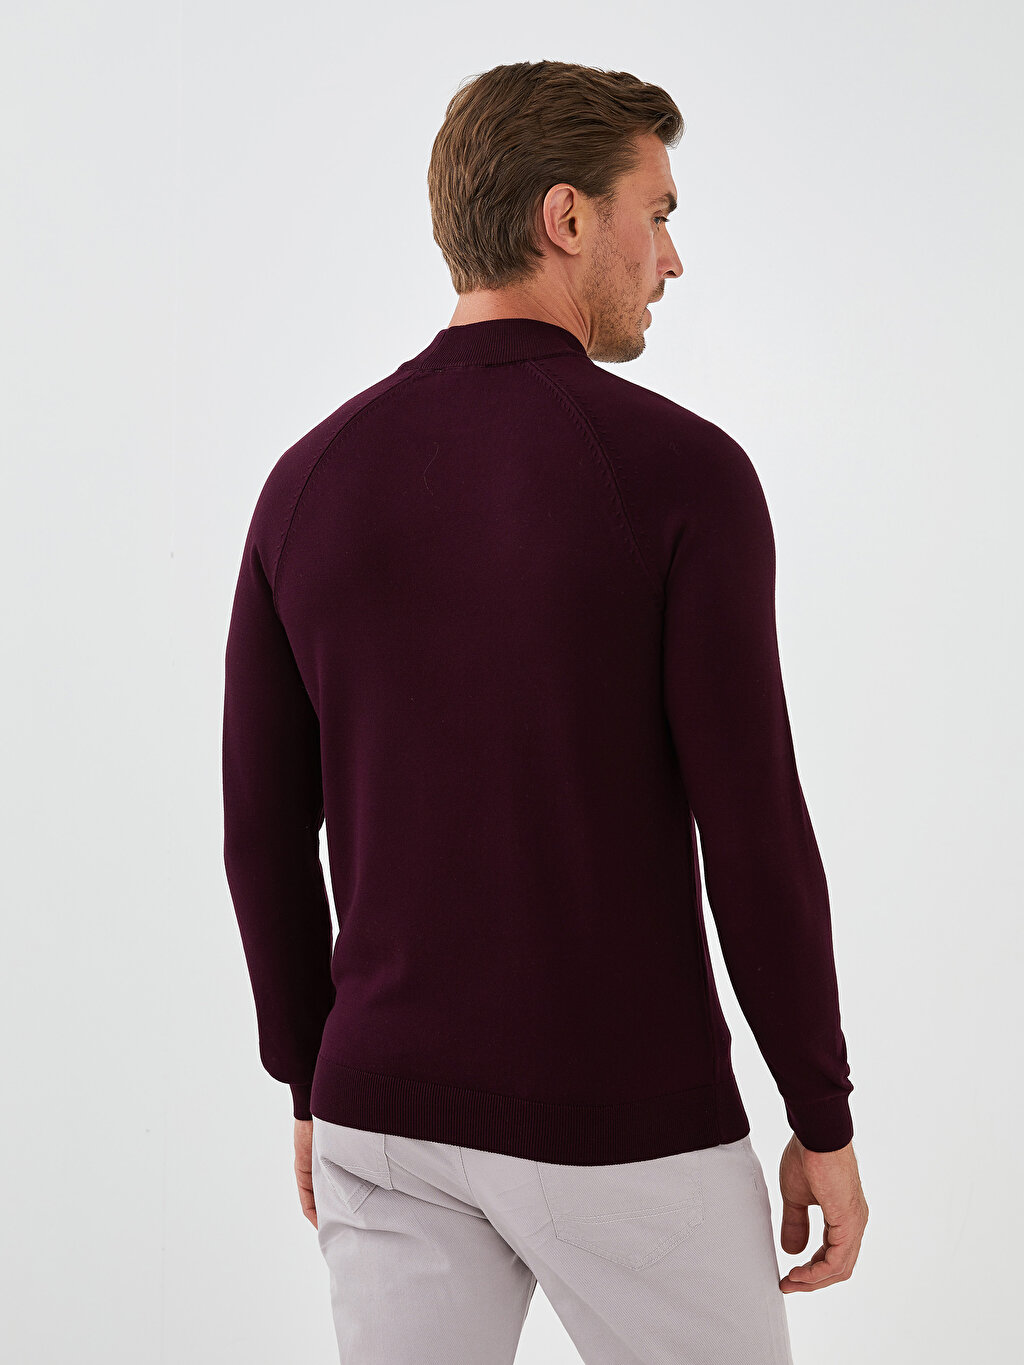 LCW VISION Half Turtleneck Long Sleeve Men's Knitwear Sweater -W11059Z8-J0S  - W11059Z8-J0S - LC Waikiki